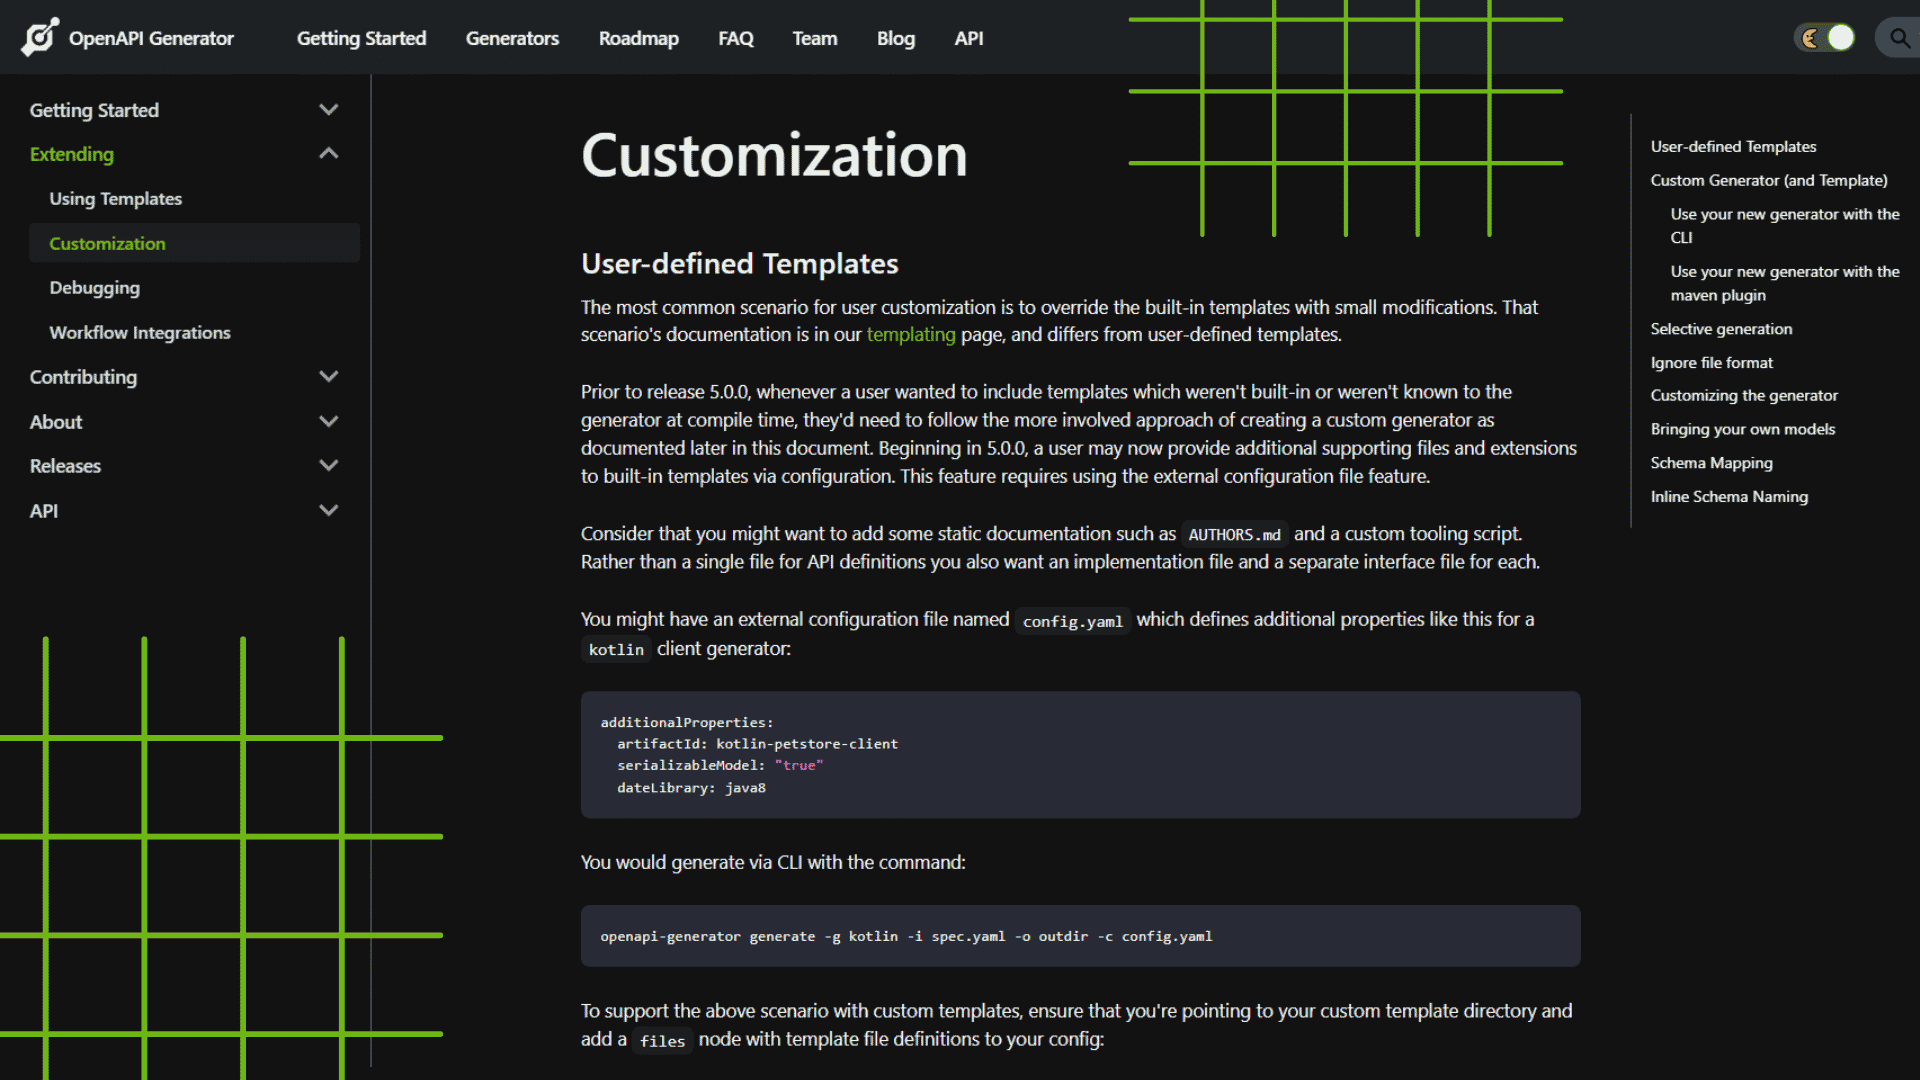 Key Features - Custom templates